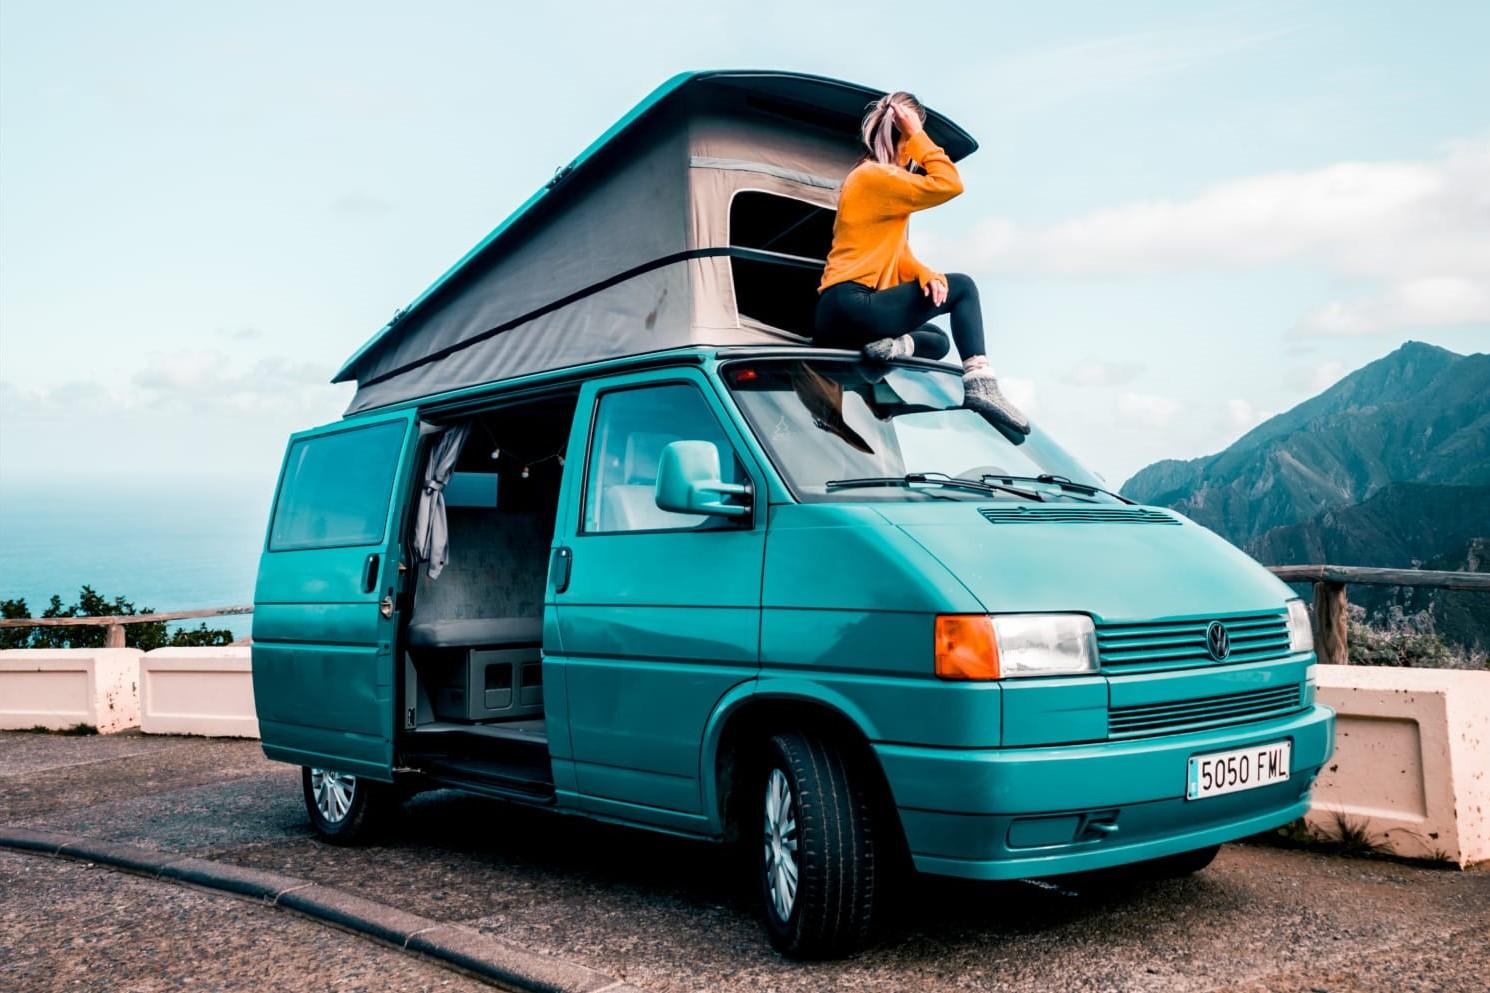 VW California T4 Campervan Rental